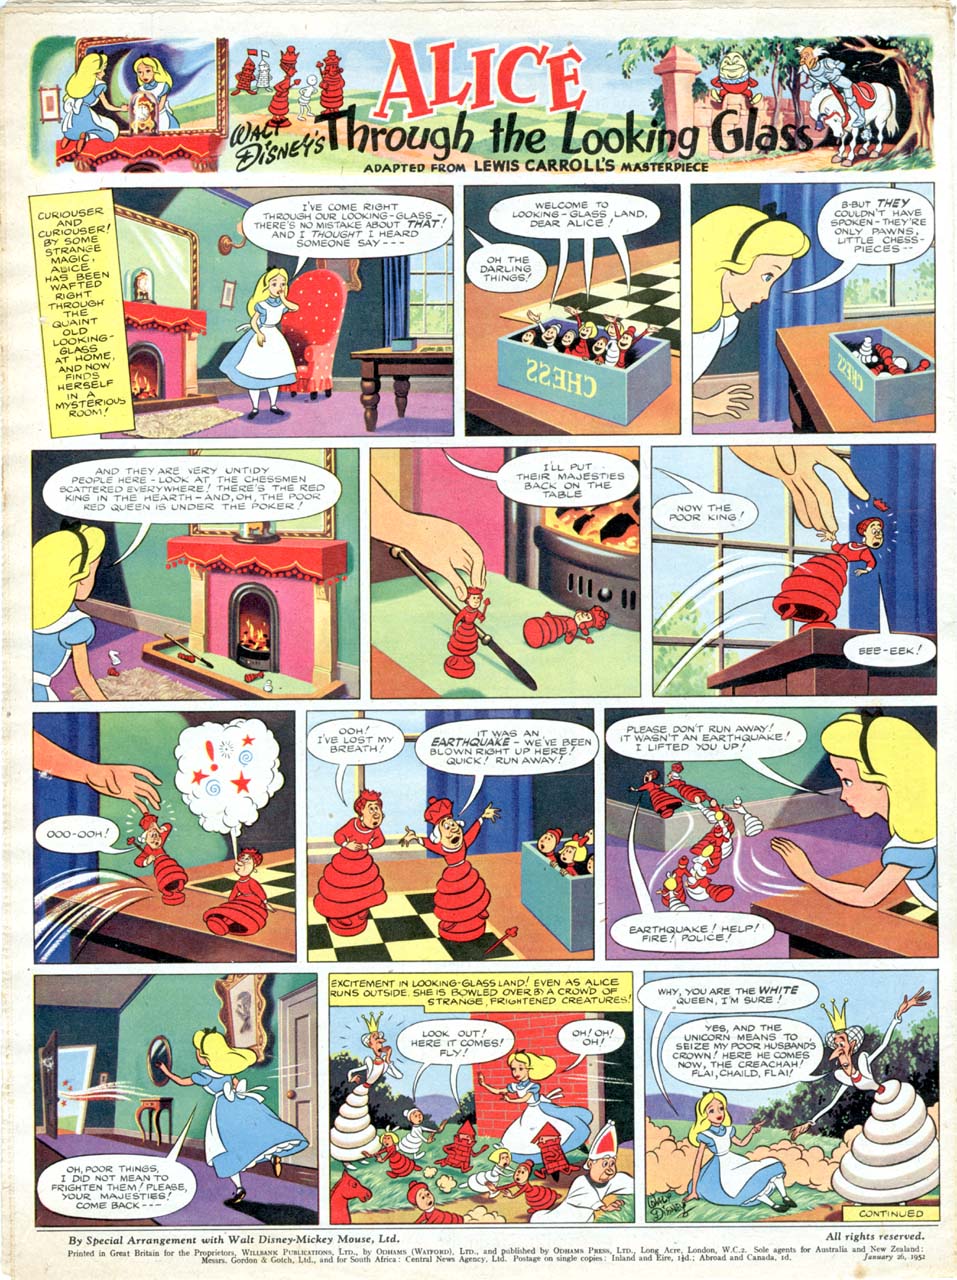 José Raúl Capablanca Cartoons and Comics - funny pictures from CartoonStock